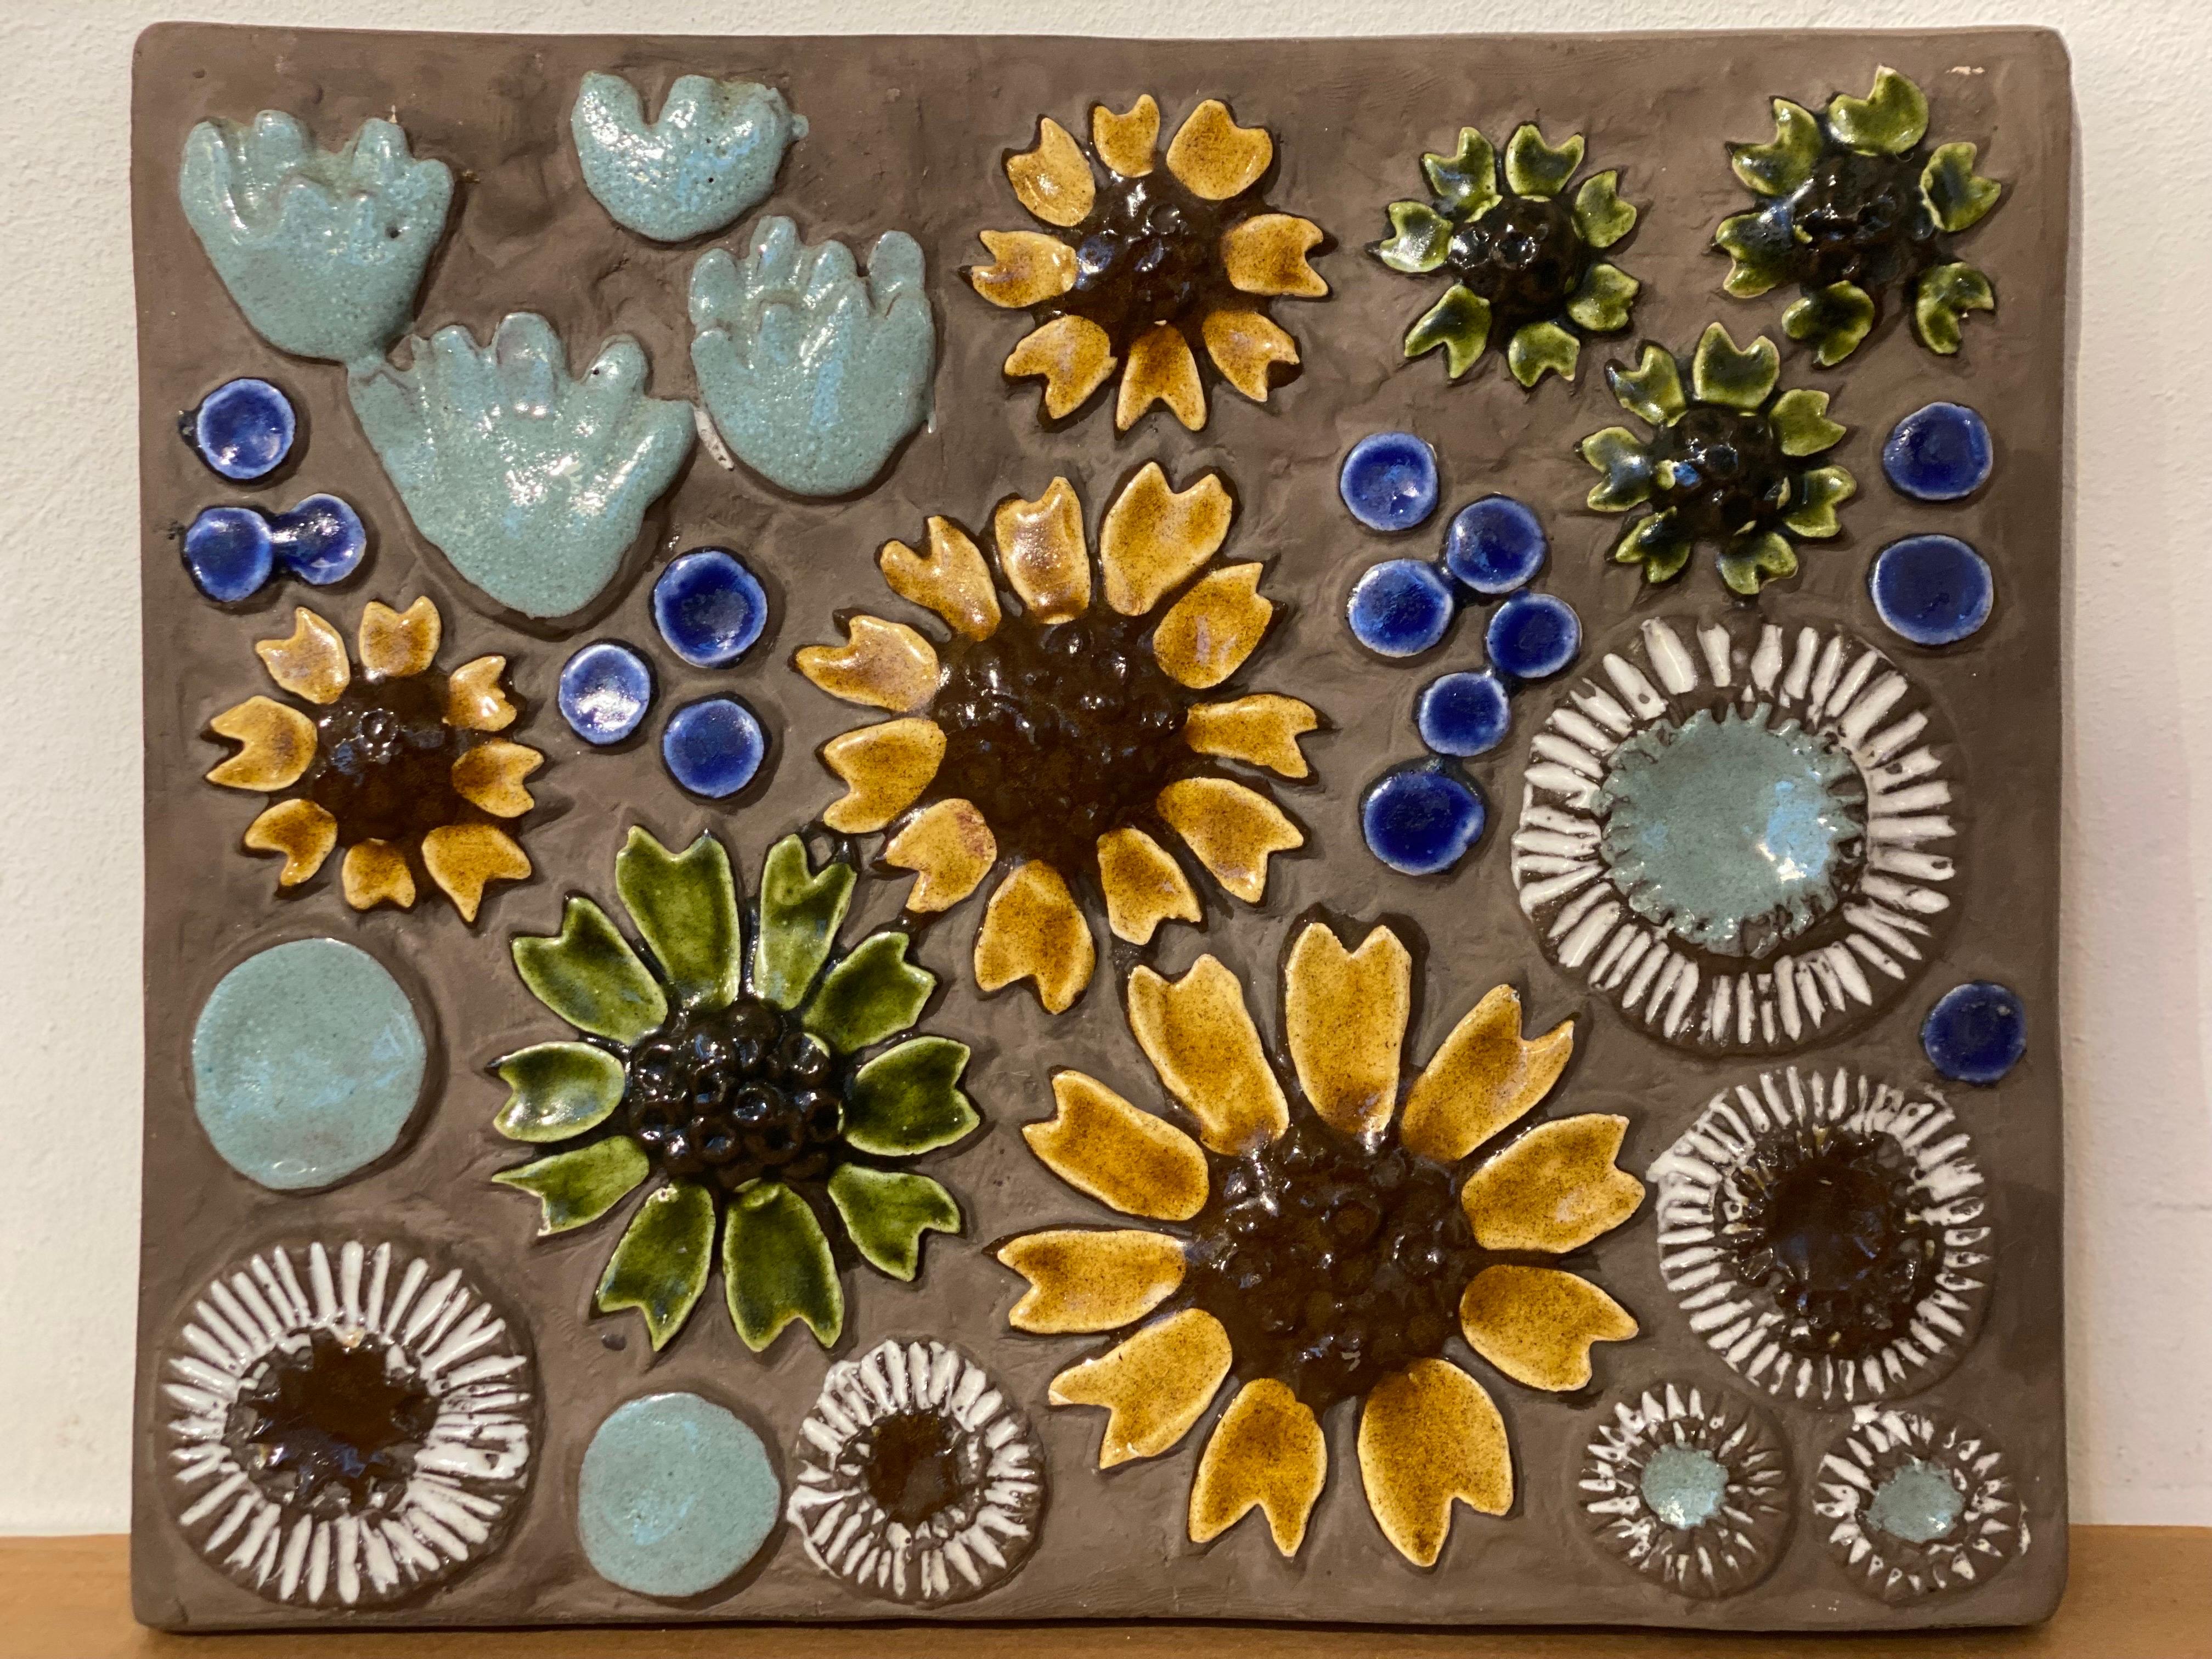 Glazed Ceramic Flower Tile designed by Aimo Nietosvuori for JIE Gantofta, Sweden